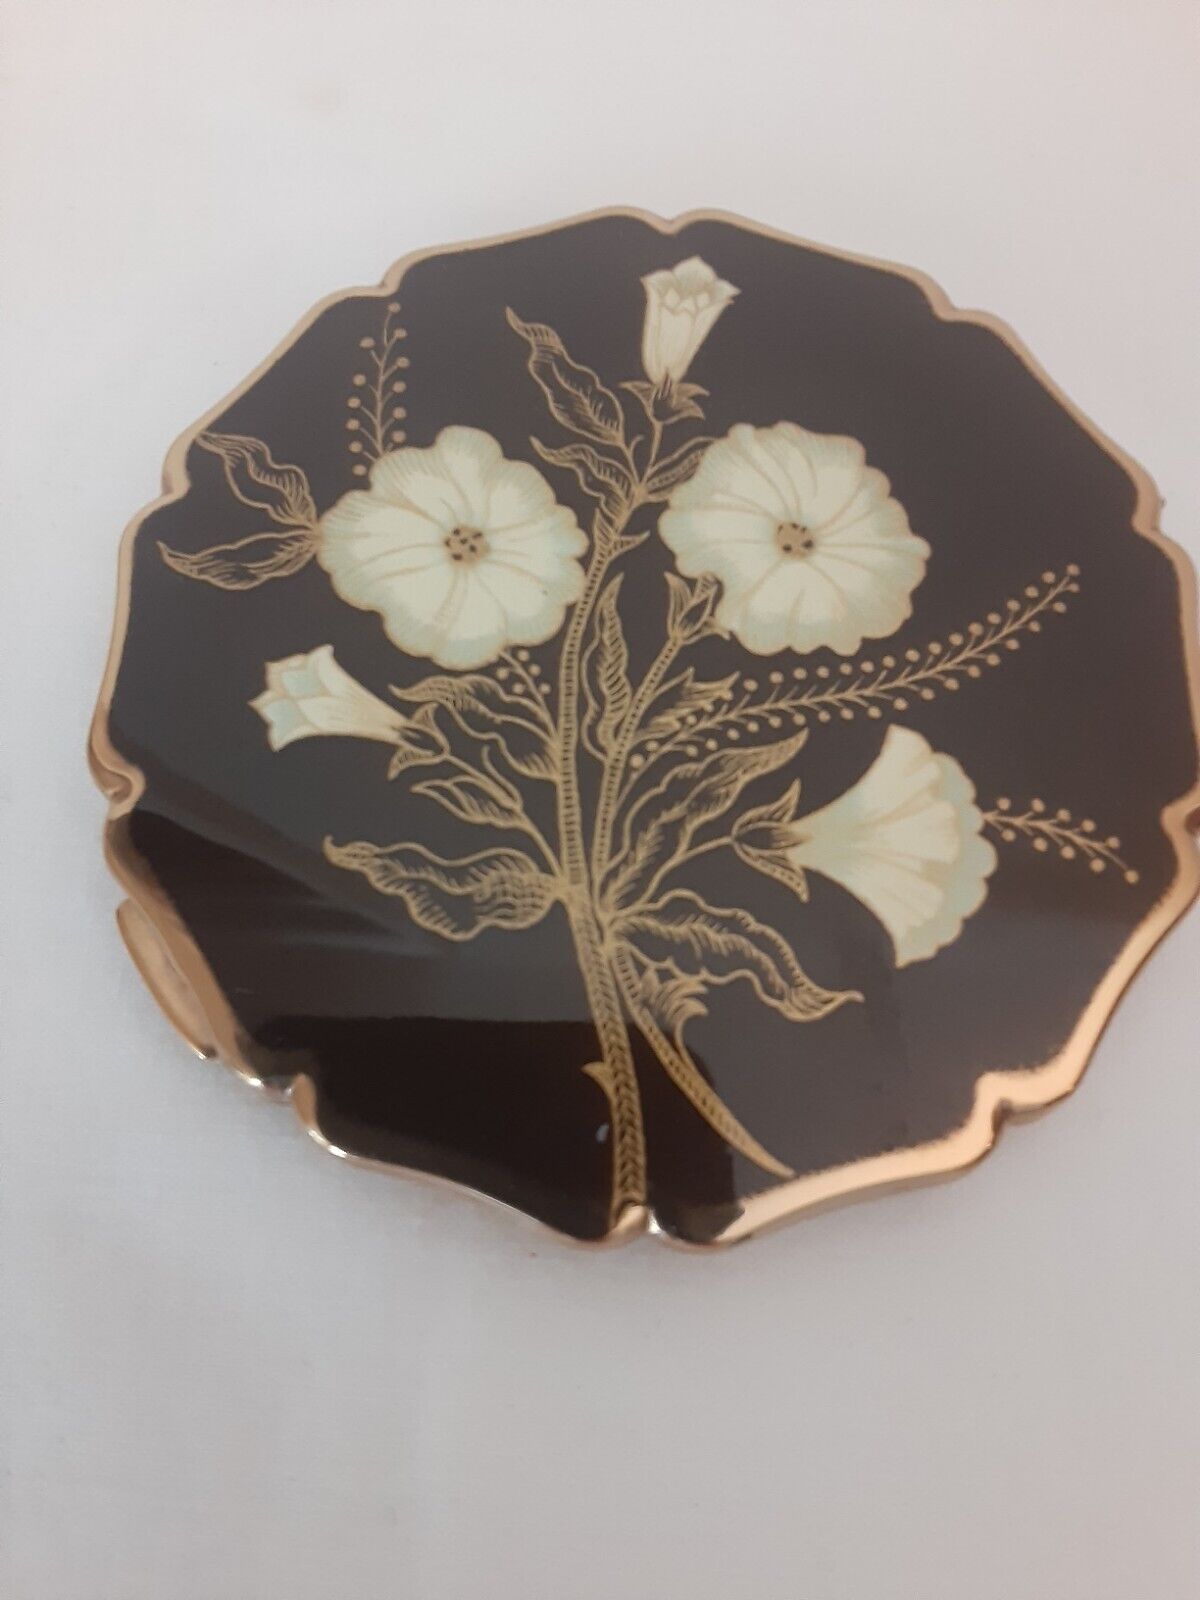 Vintage Stratton Powder Mirror Compact Enamel Black  & Gold W/ White Flowers